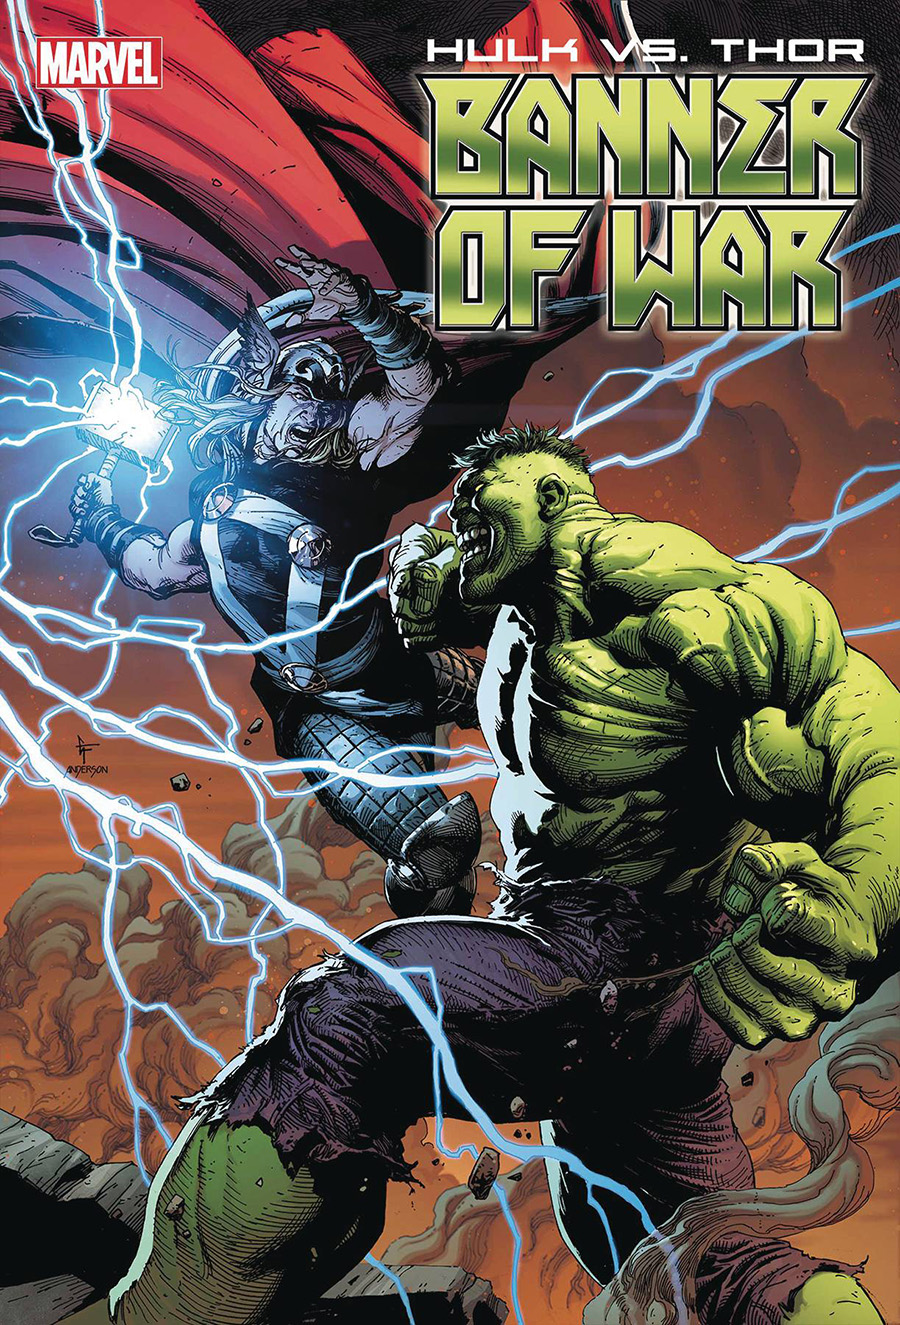 Hulk vs Thor Banner Of War Alpha #1 Poster